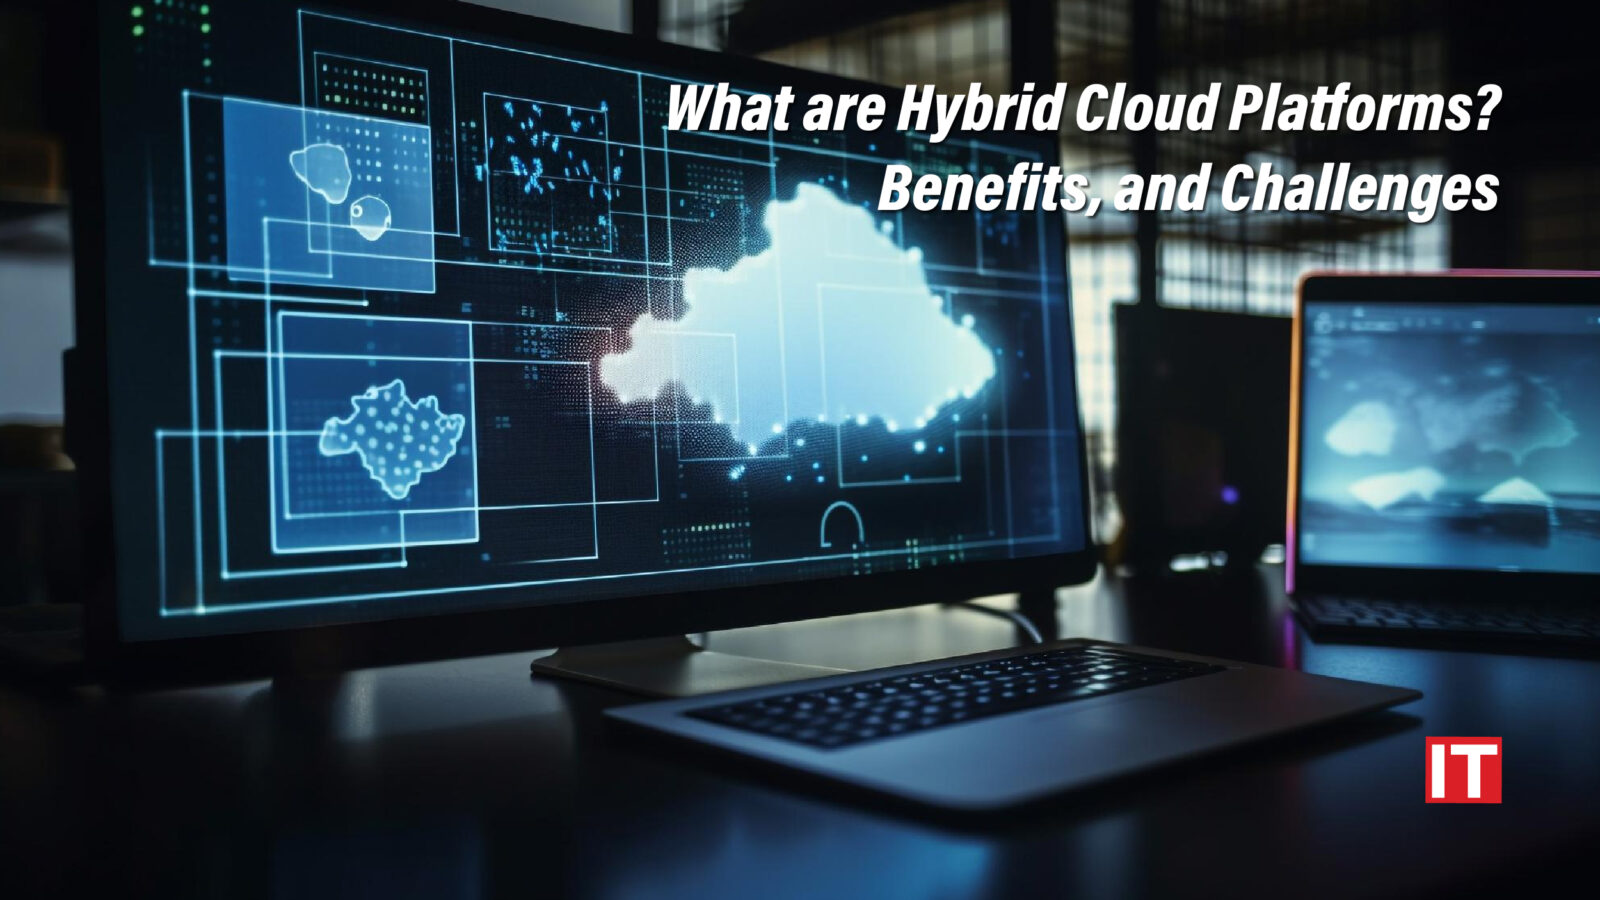 Hybrid Cloud Platforms